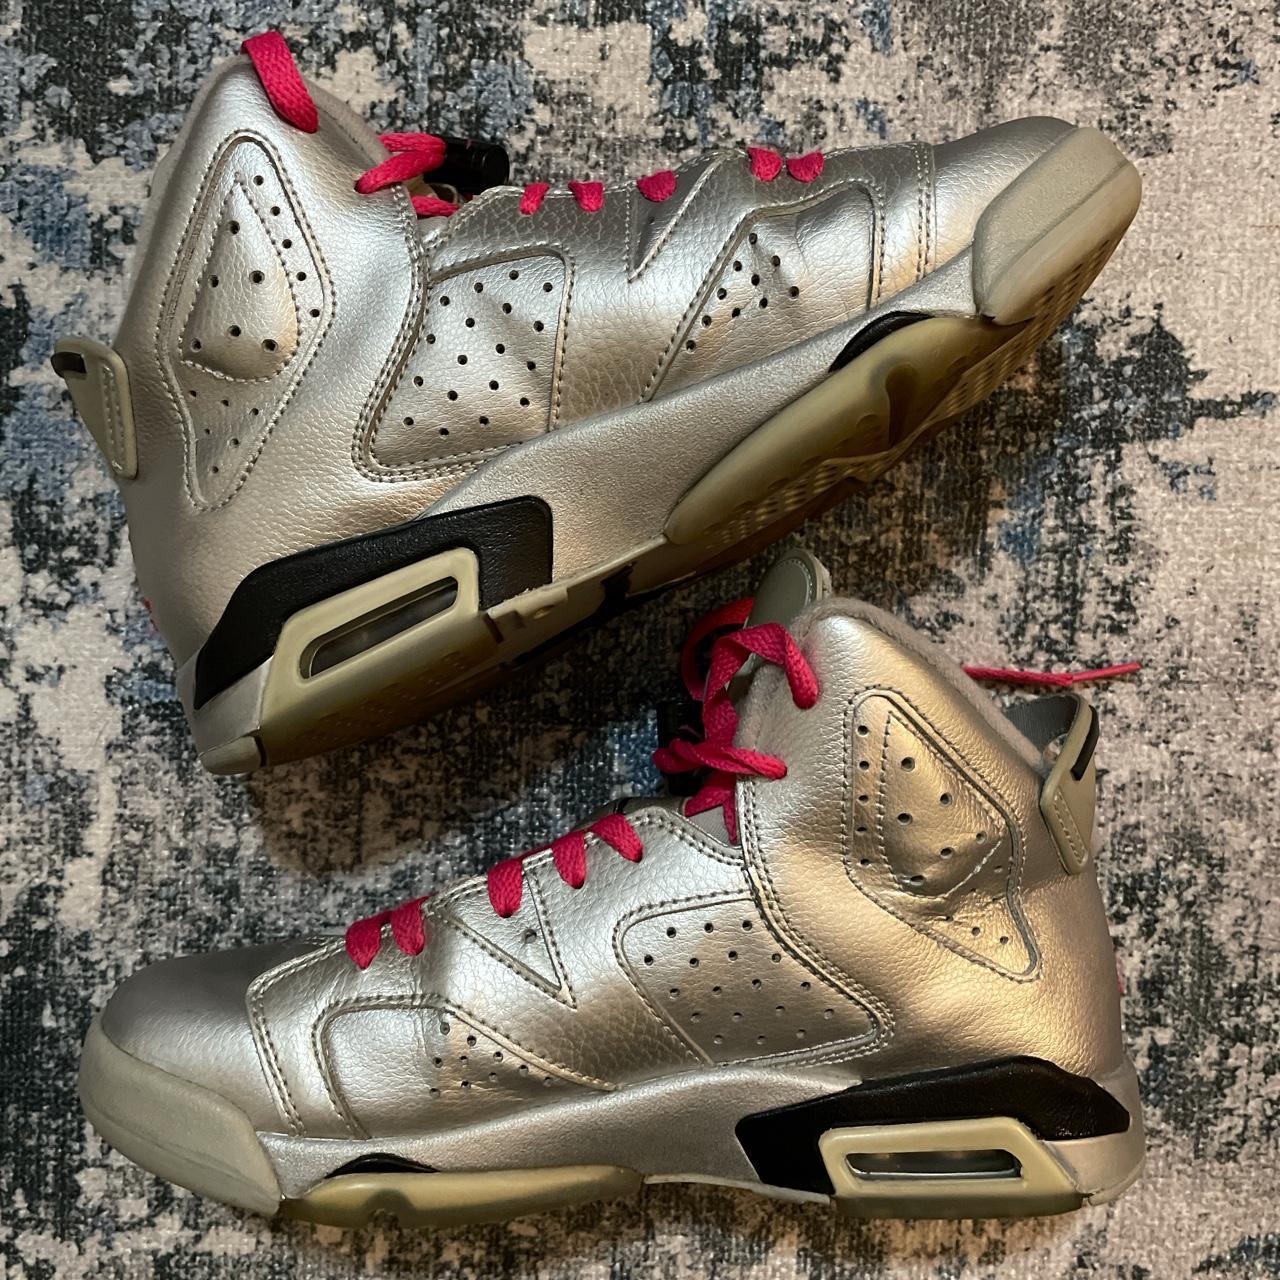 Product Image 2 - Jordan 6 “Valentines Day” Sneaker!

Size:5.5y
Release:11/19/13

#Jordan